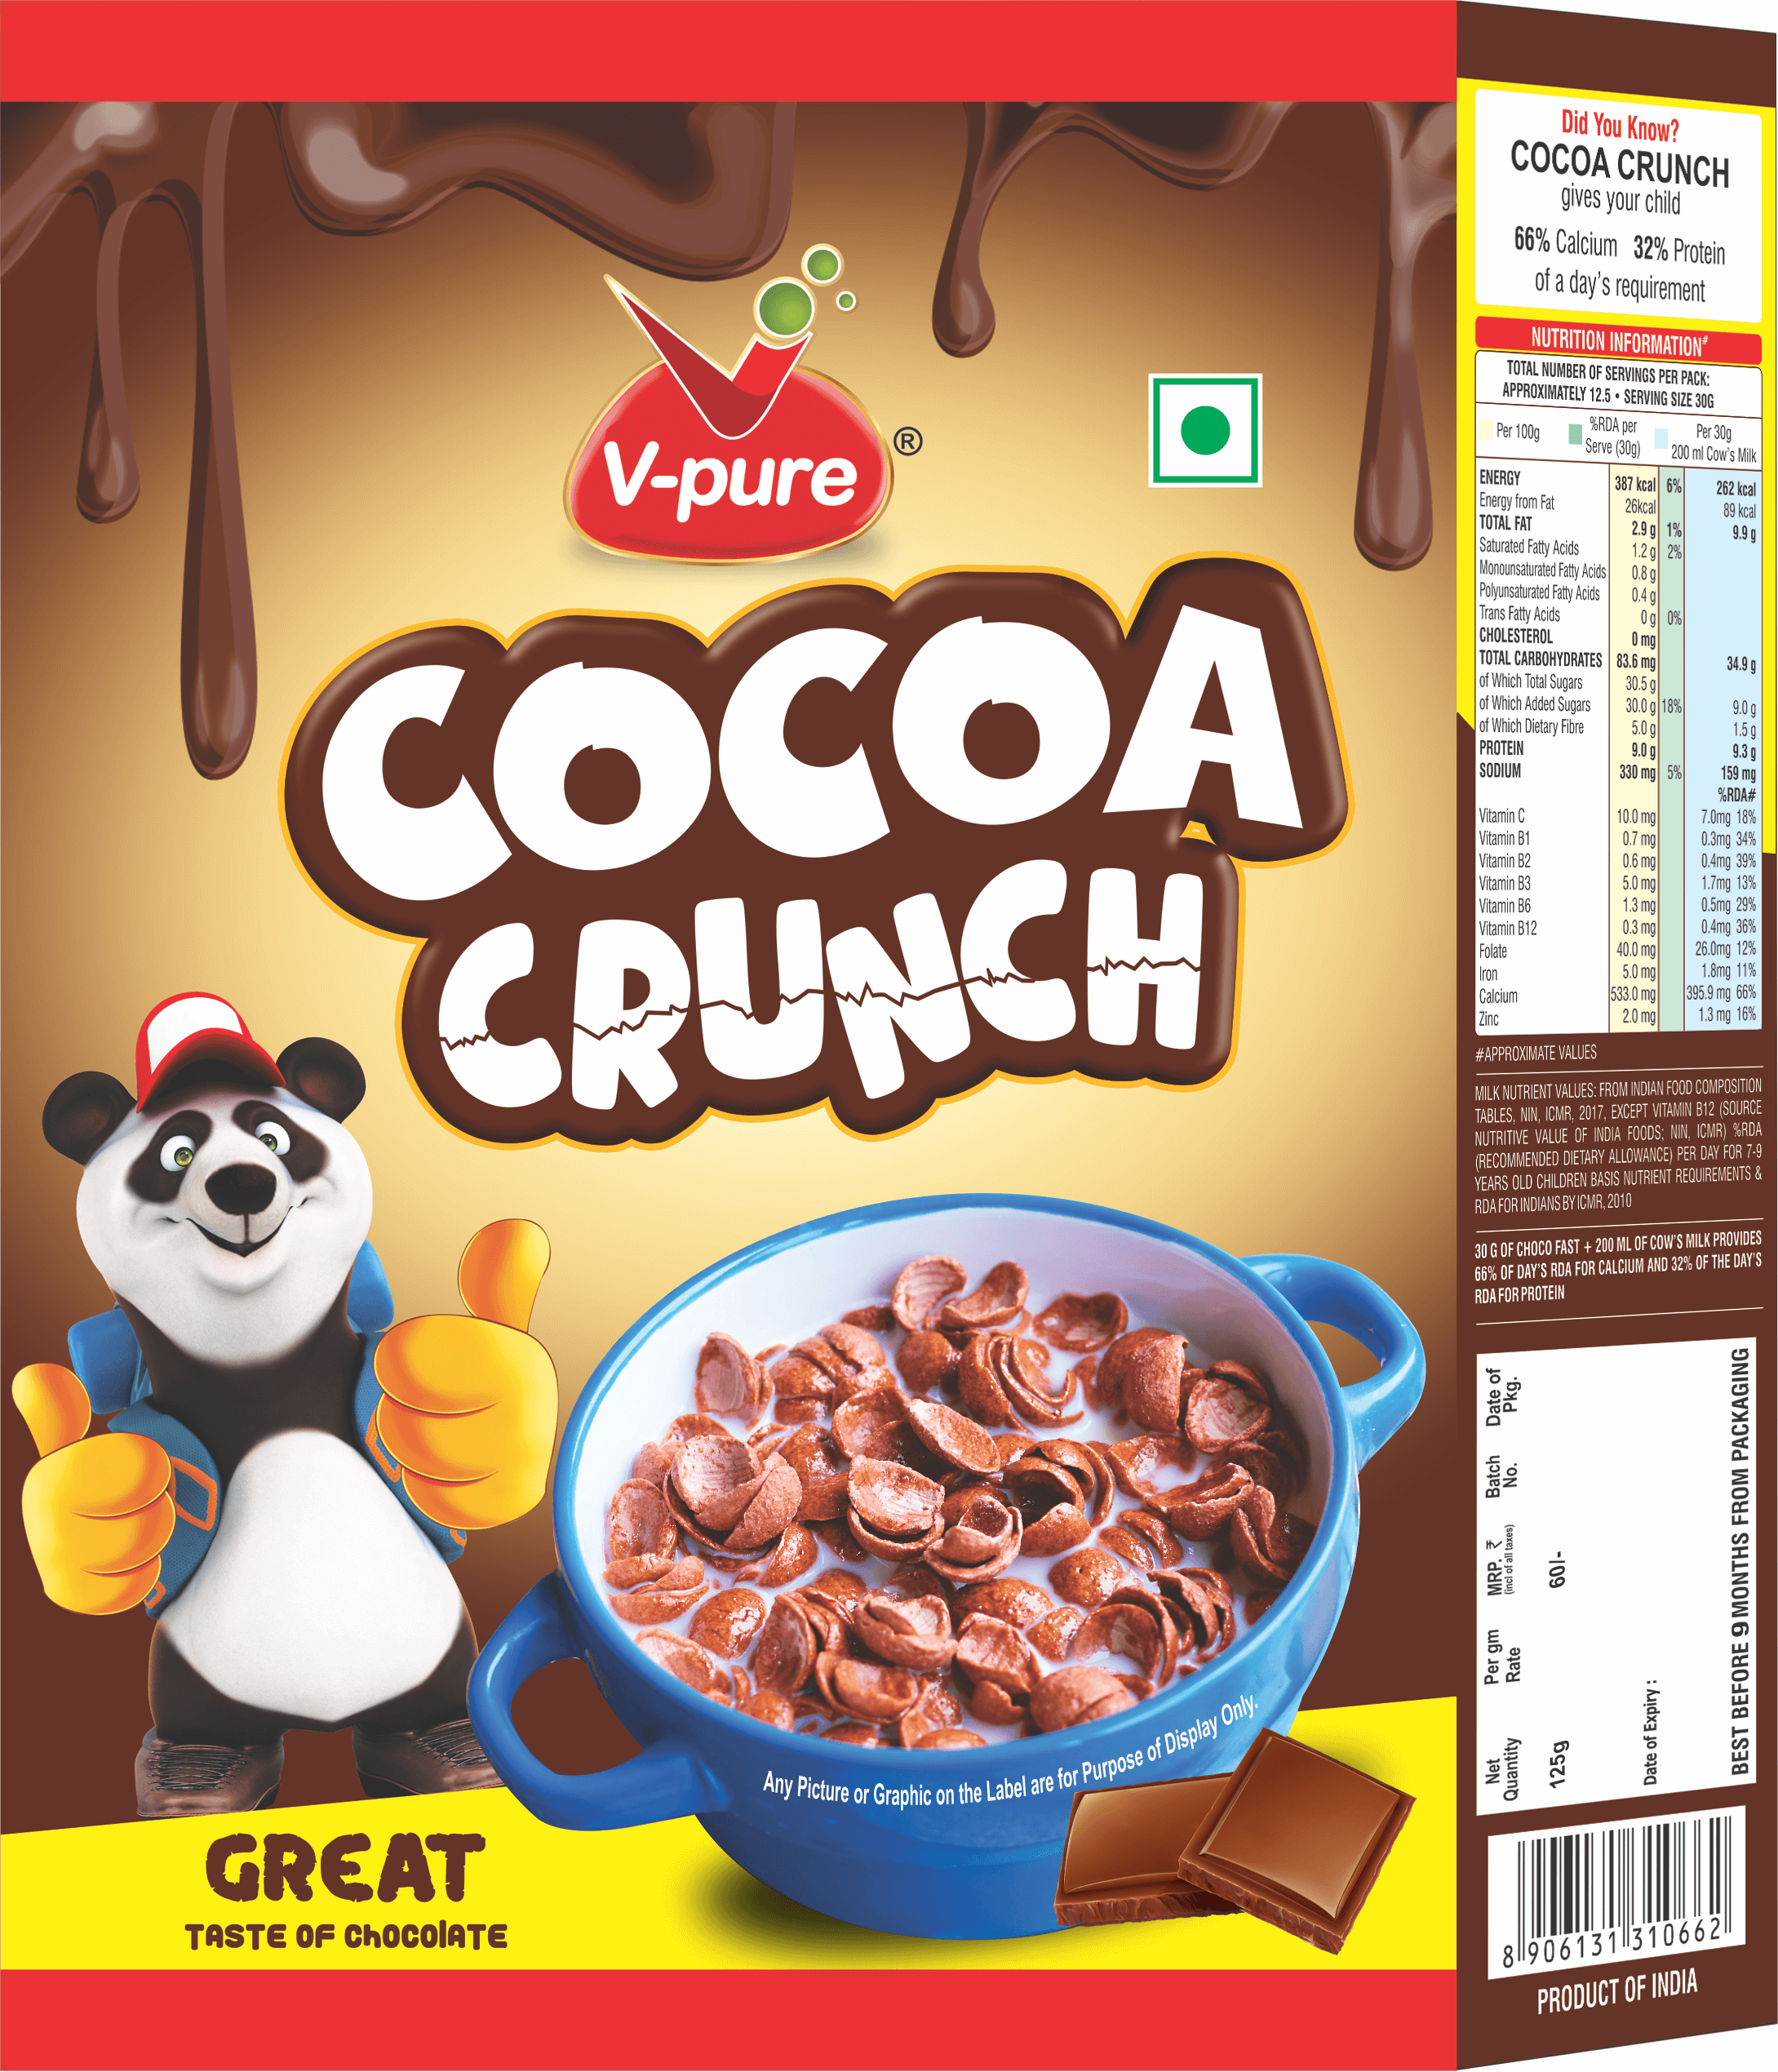 V-pure Cocoa Chocos